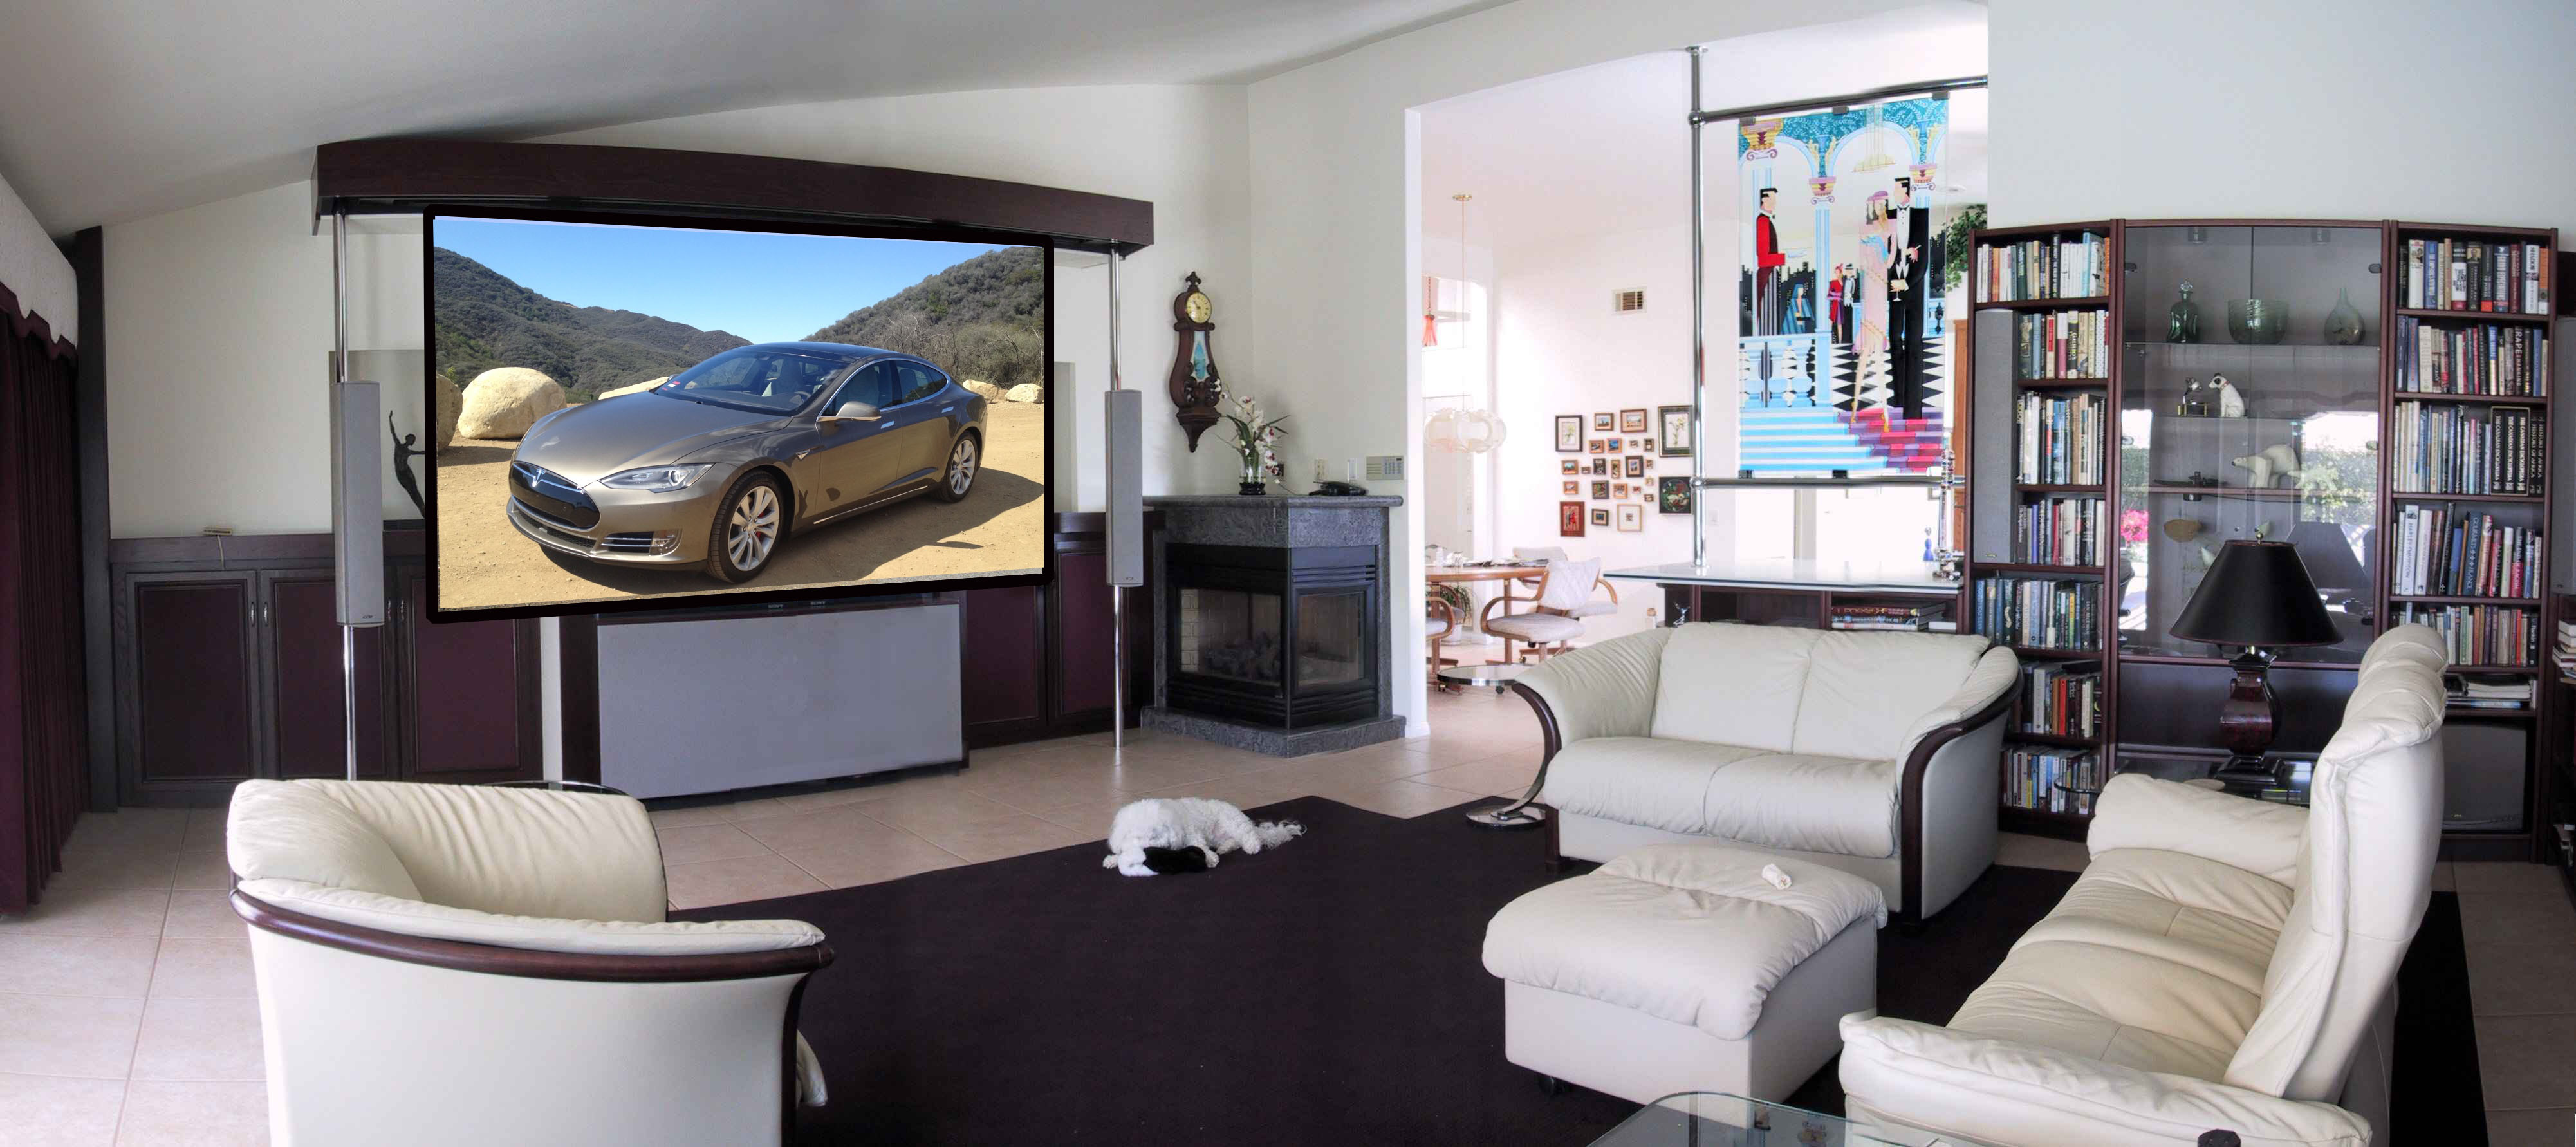 My home theater large screen Tesla.jpg